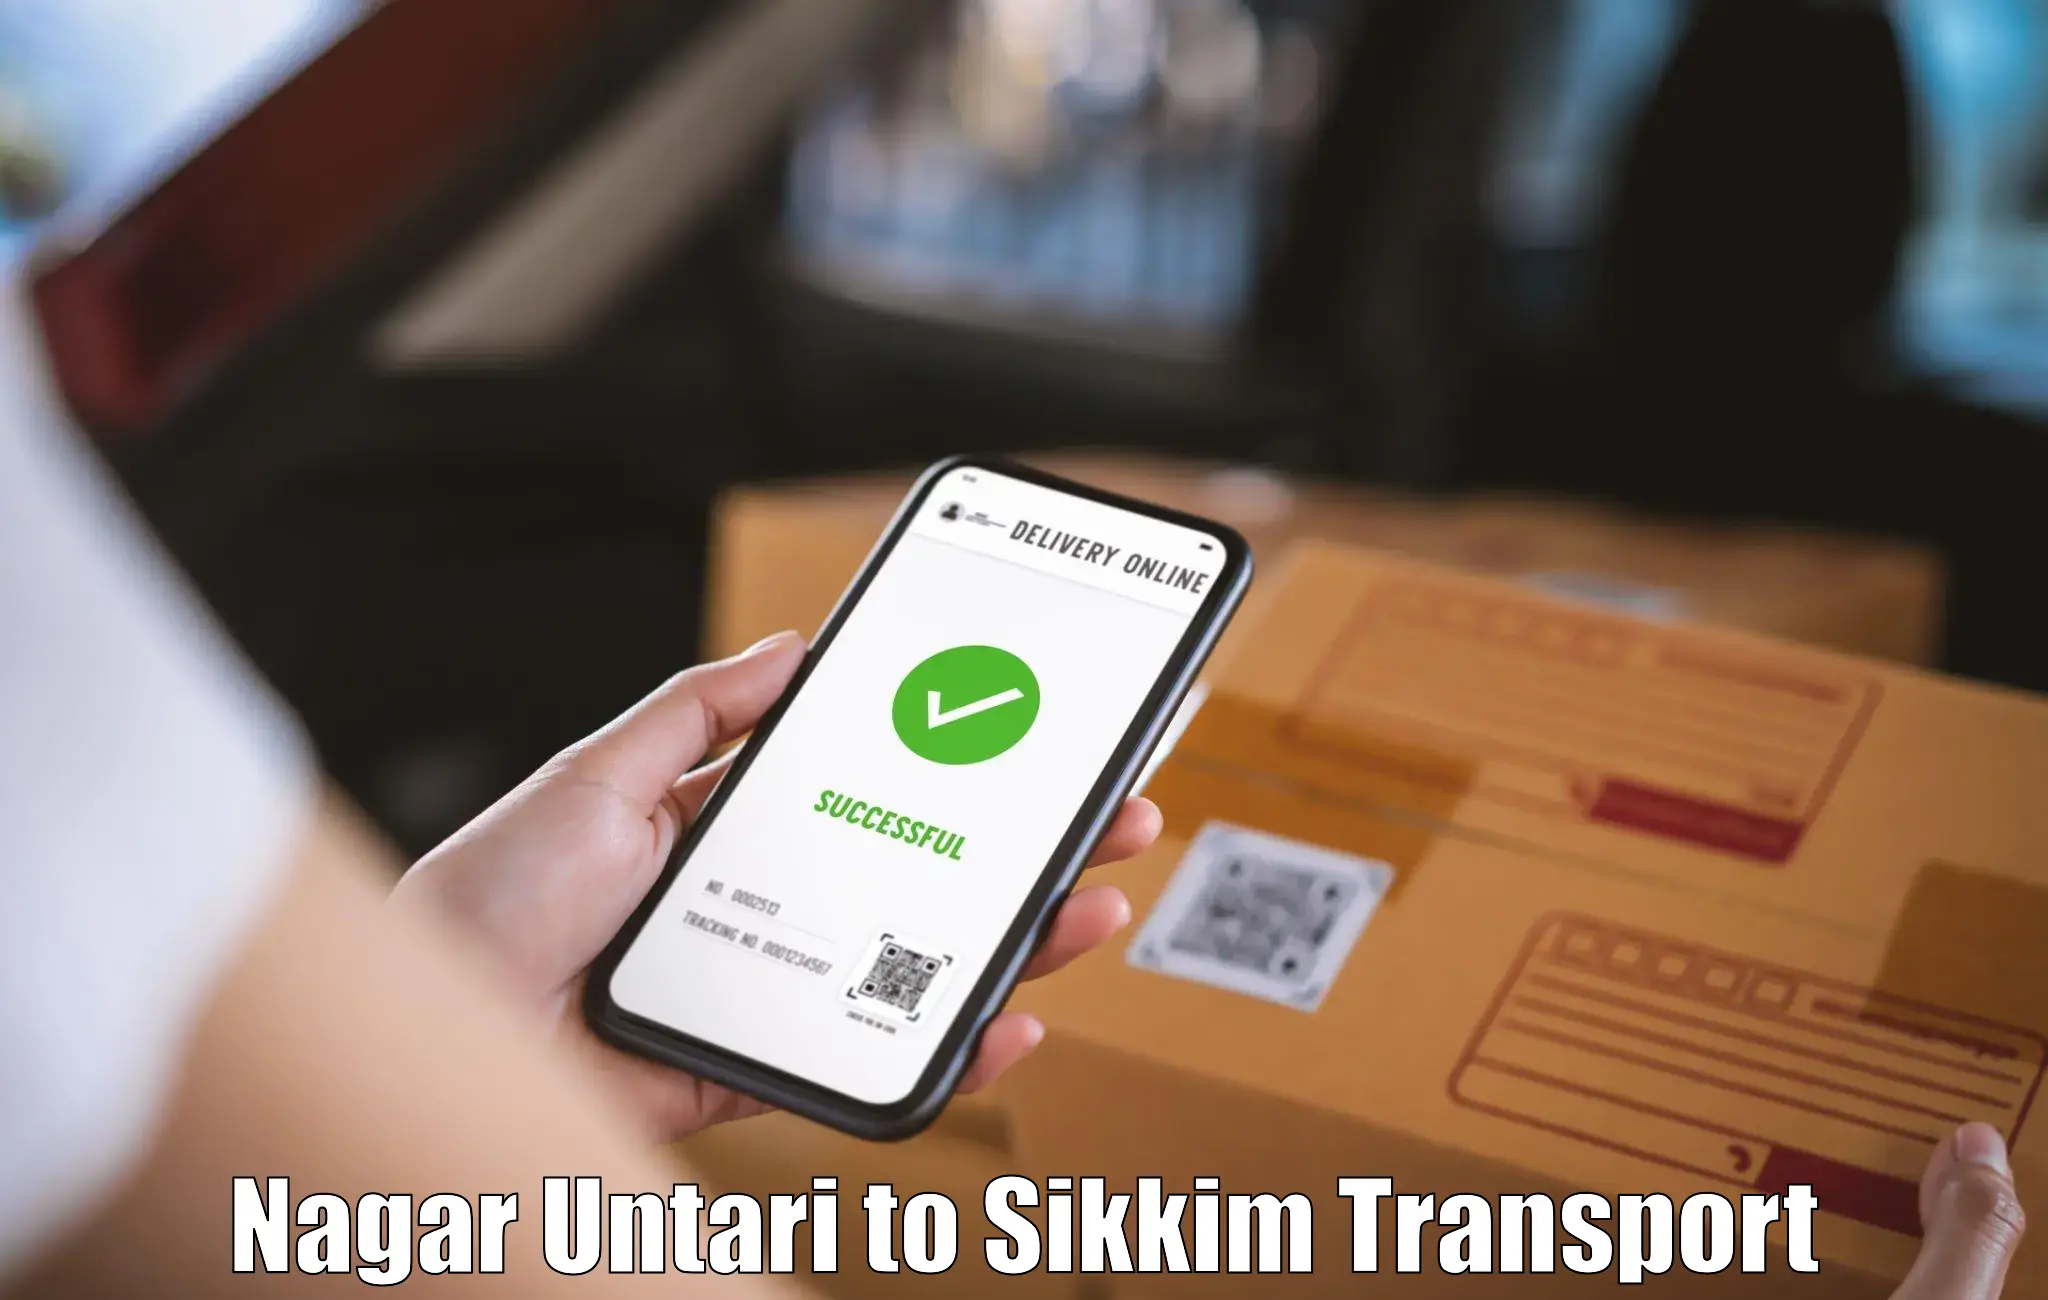 Domestic transport services Nagar Untari to East Sikkim